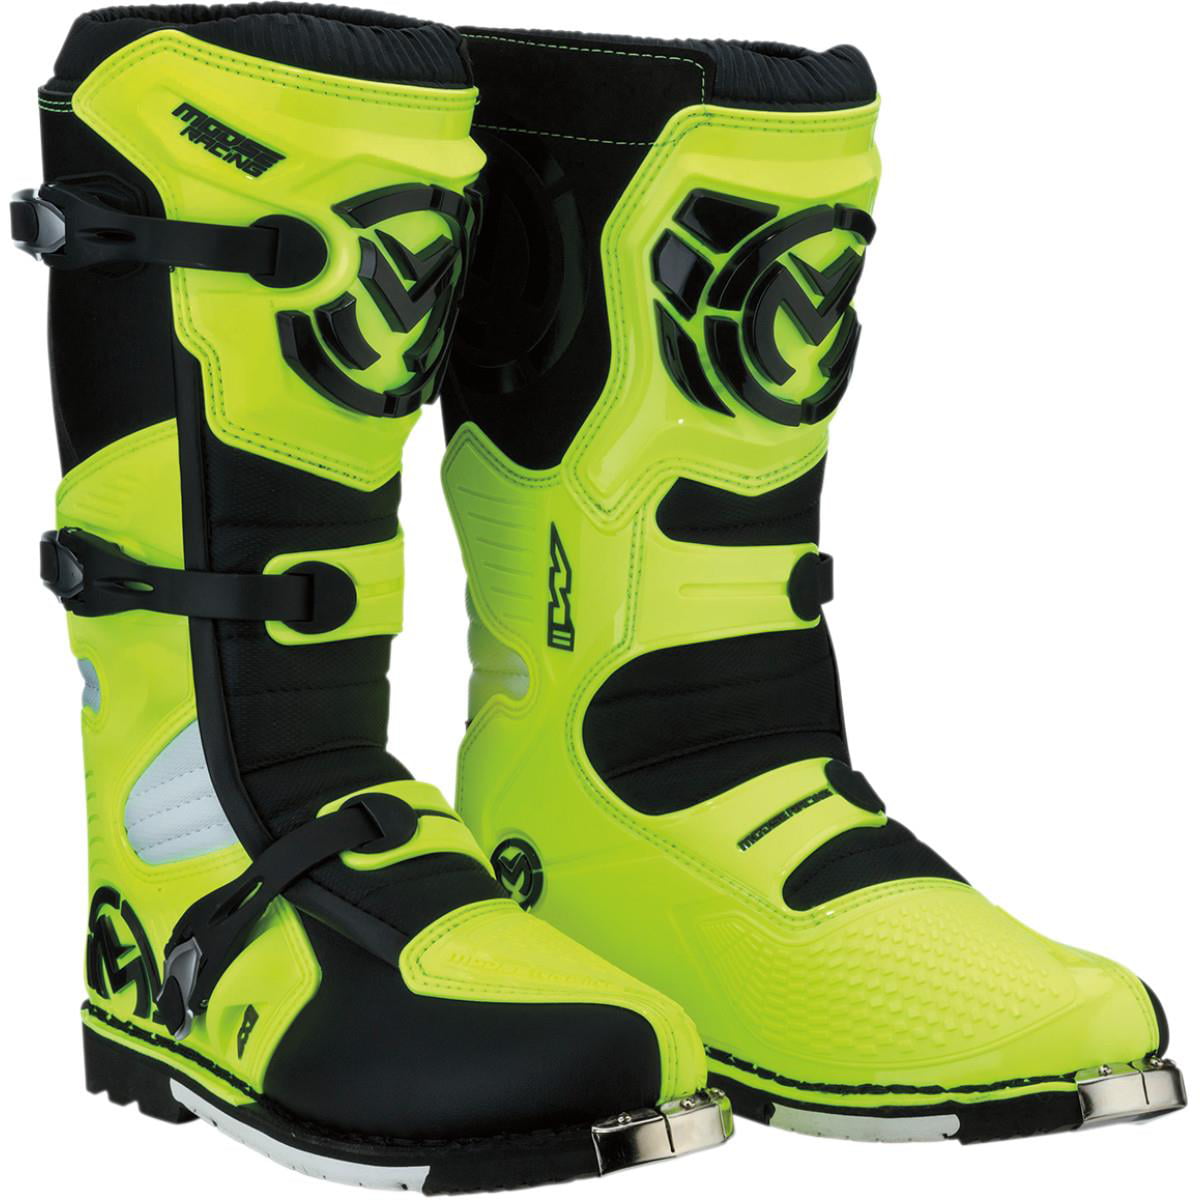 size 13 mx boots